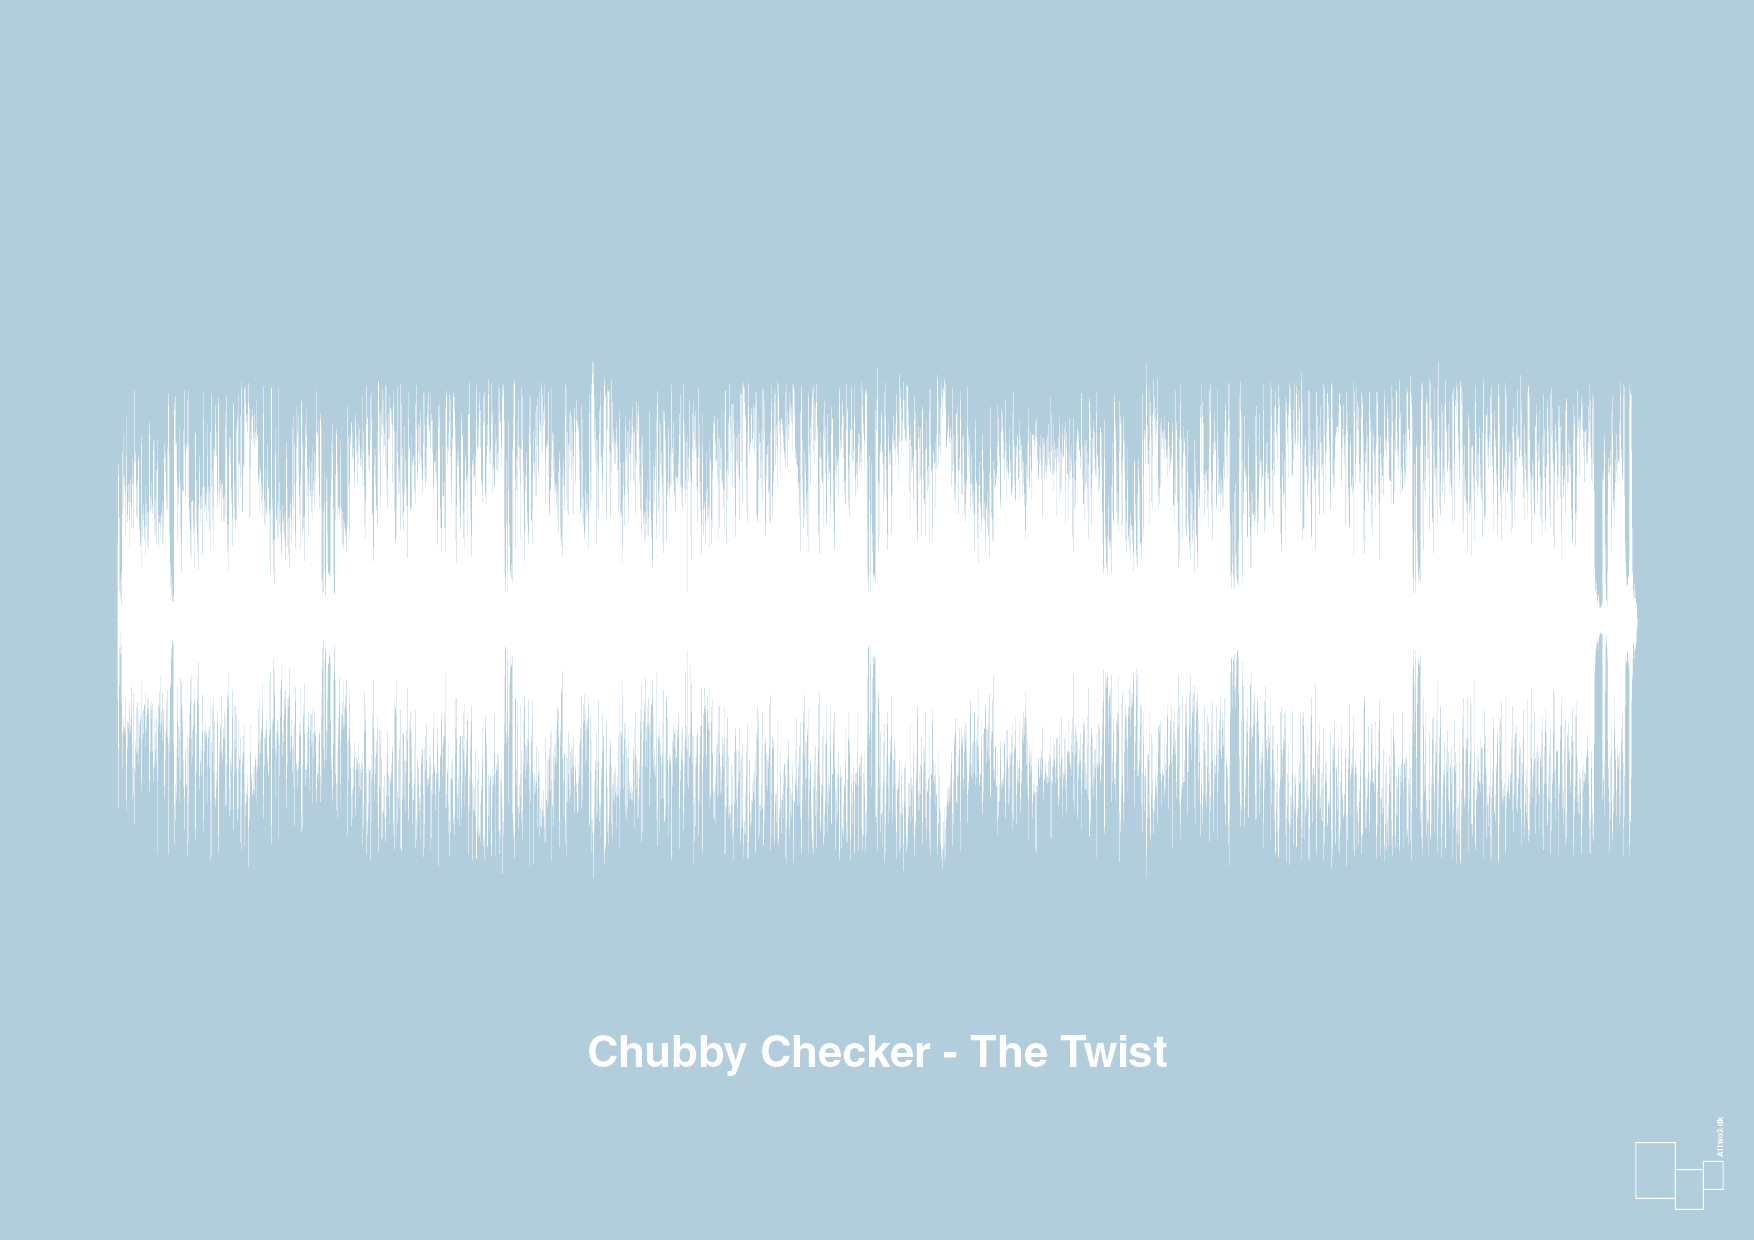 chubby checker - the twist - Plakat med Musik i Heavenly Blue